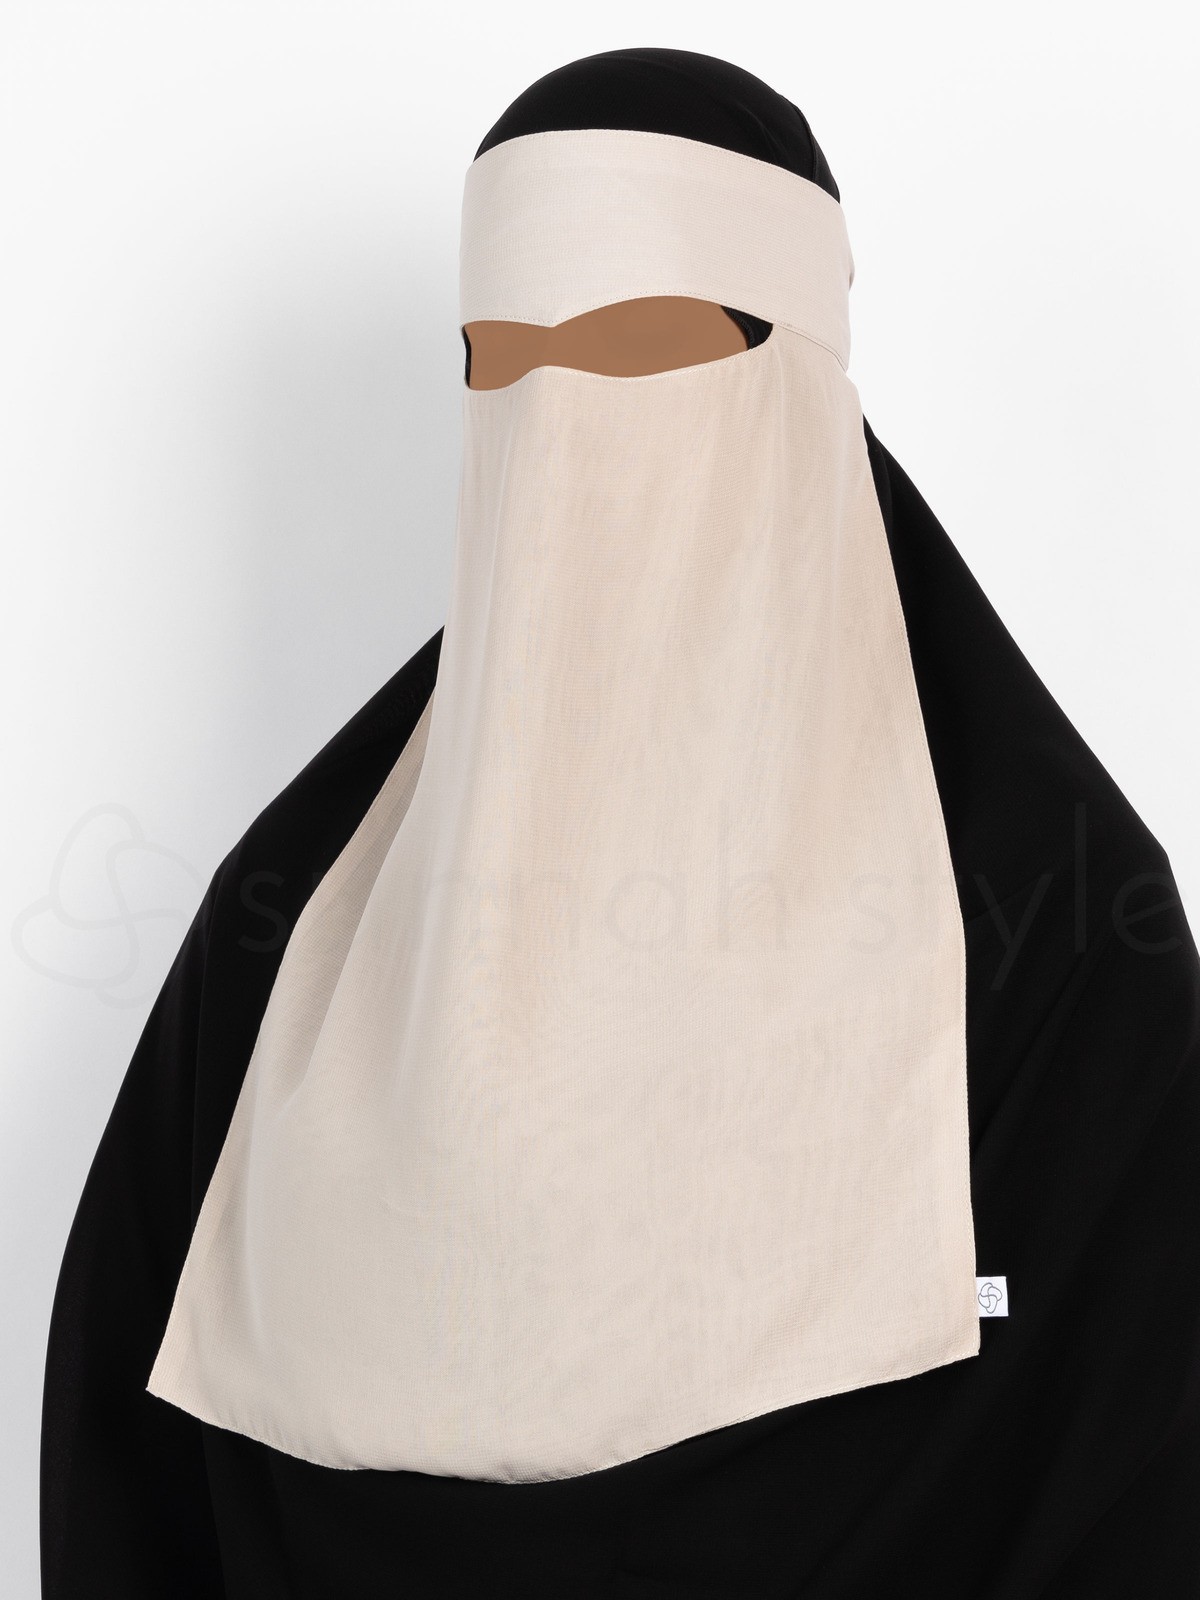 Sunnah Style - One Layer Widow's Peak Niqab (Sahara)